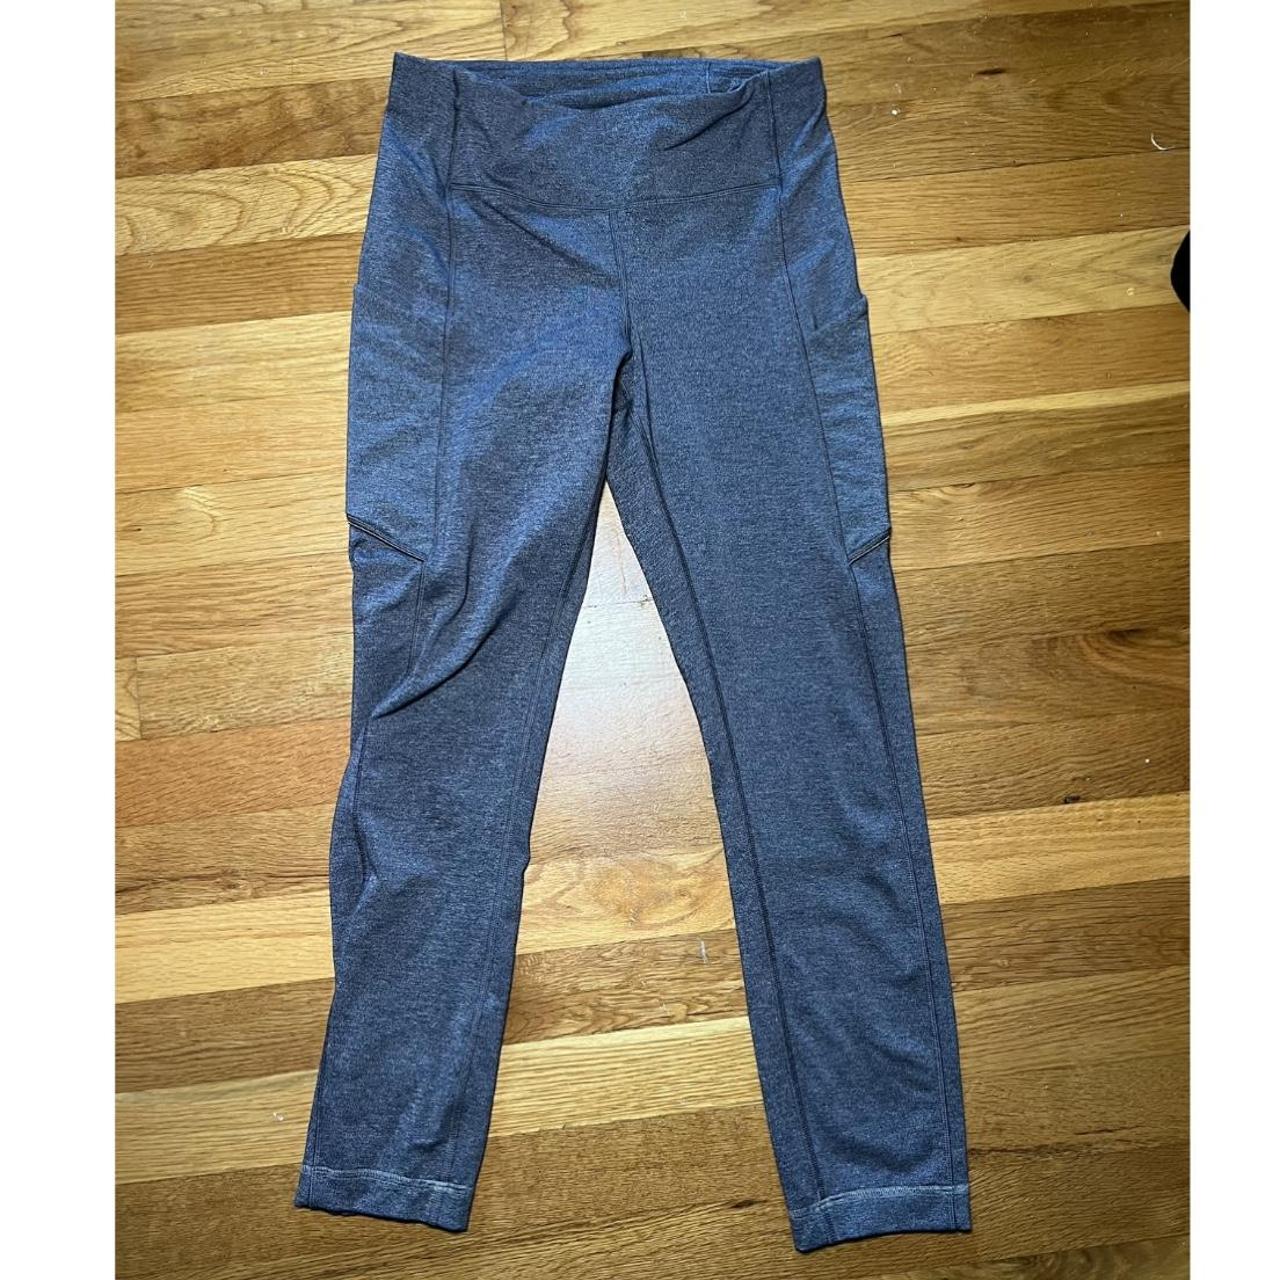 Grey lululemon leggings with pockets. Only - Depop